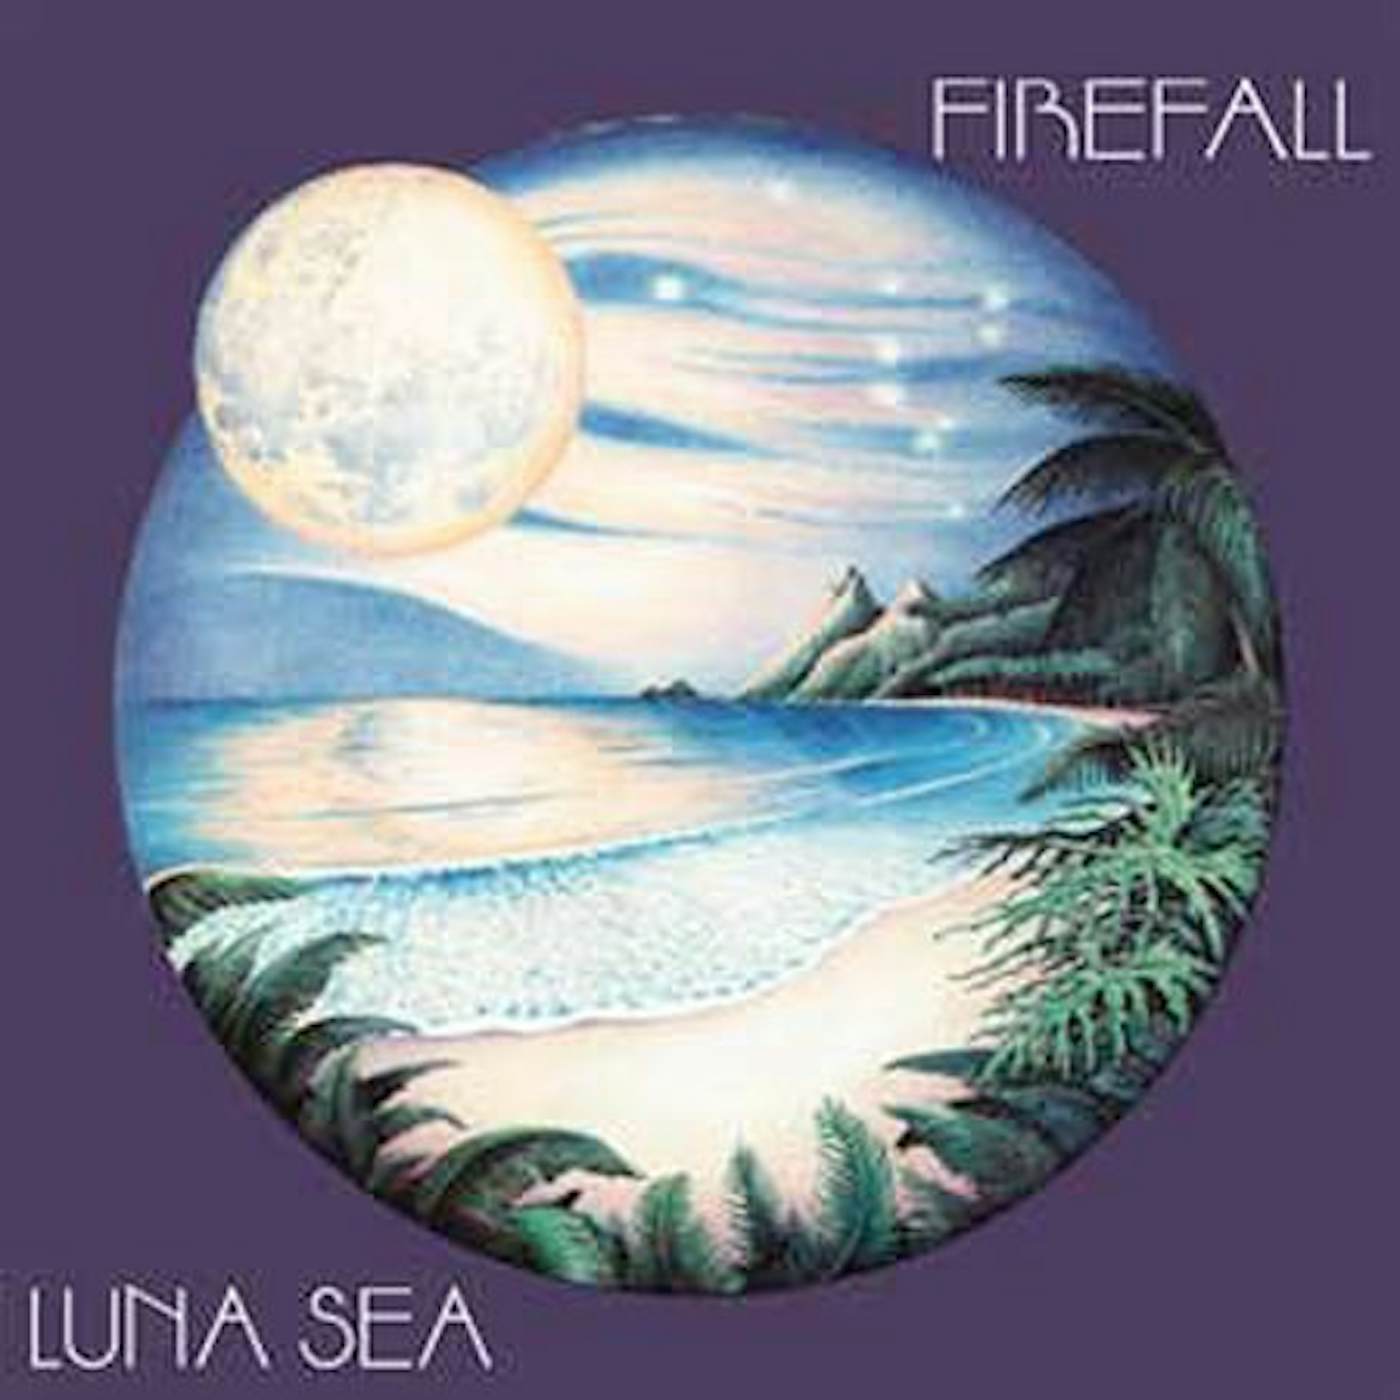 Firefall LUNA SEA CD